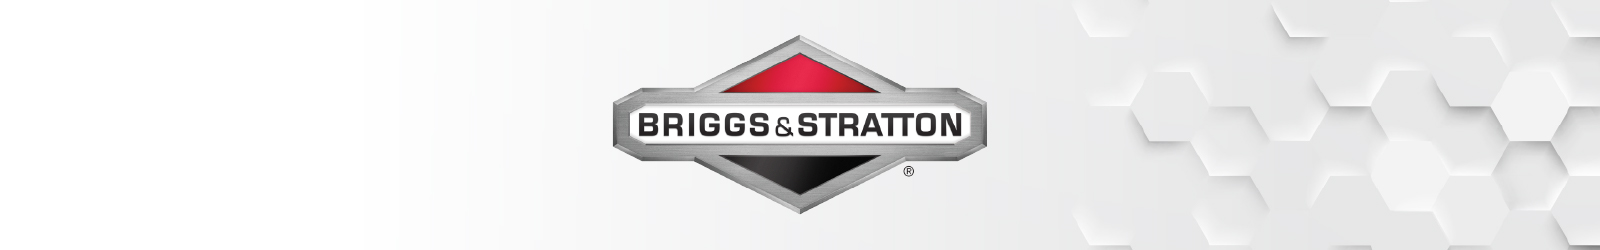 Briggs & Stratton Dealer Materials